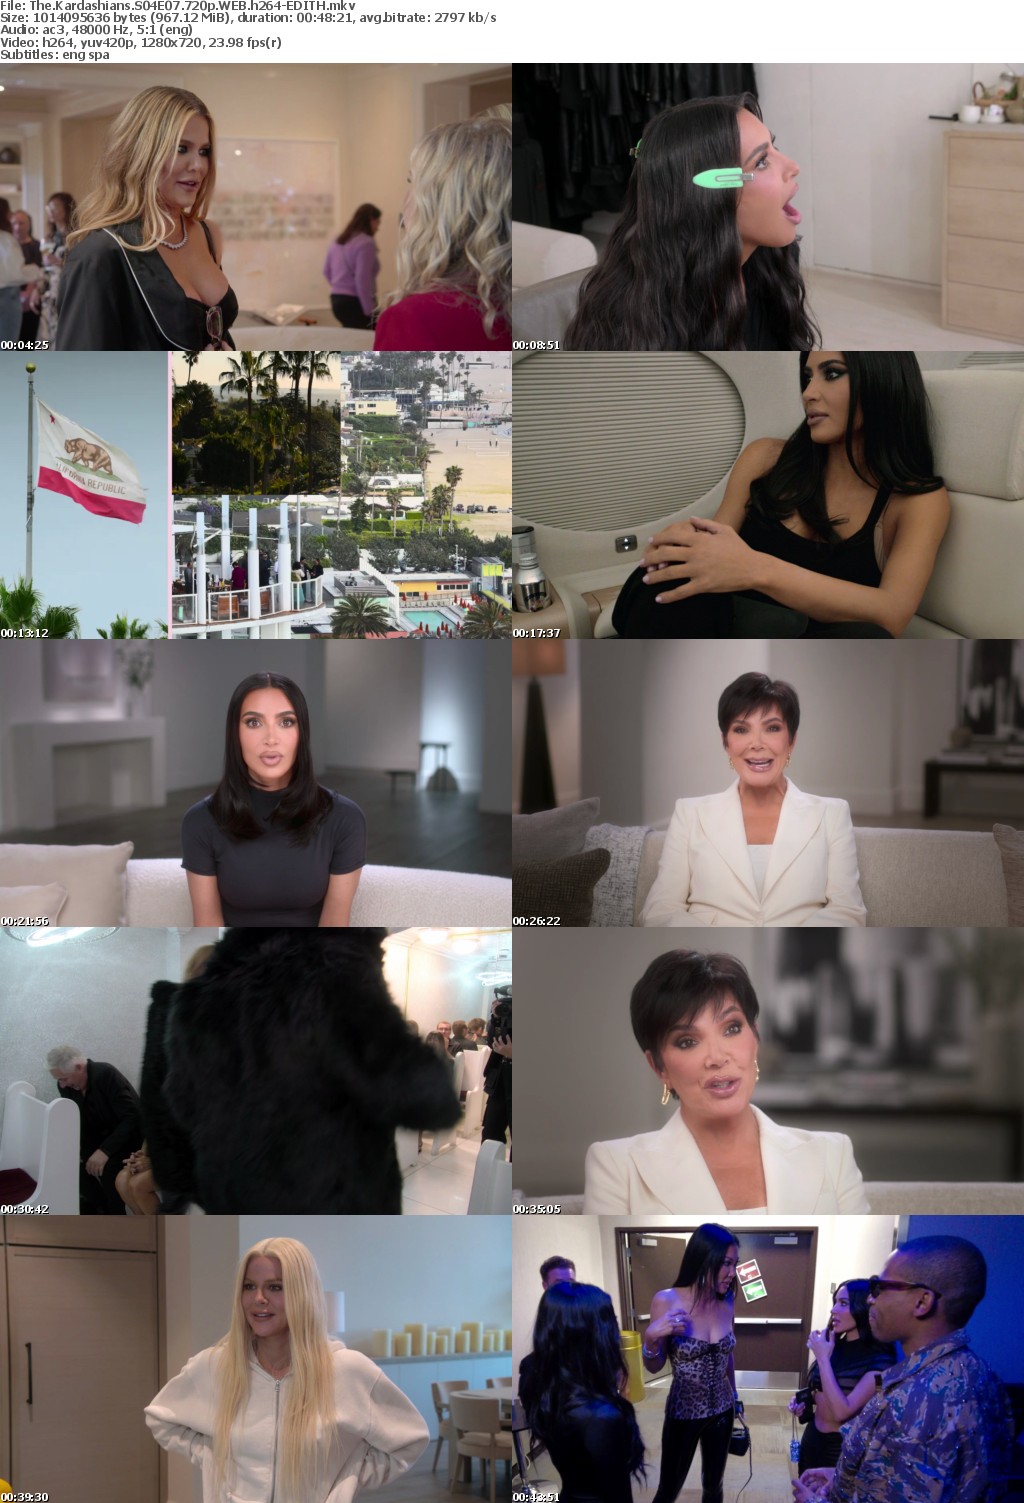 The Kardashians S04E07 720p WEB h264-EDITH